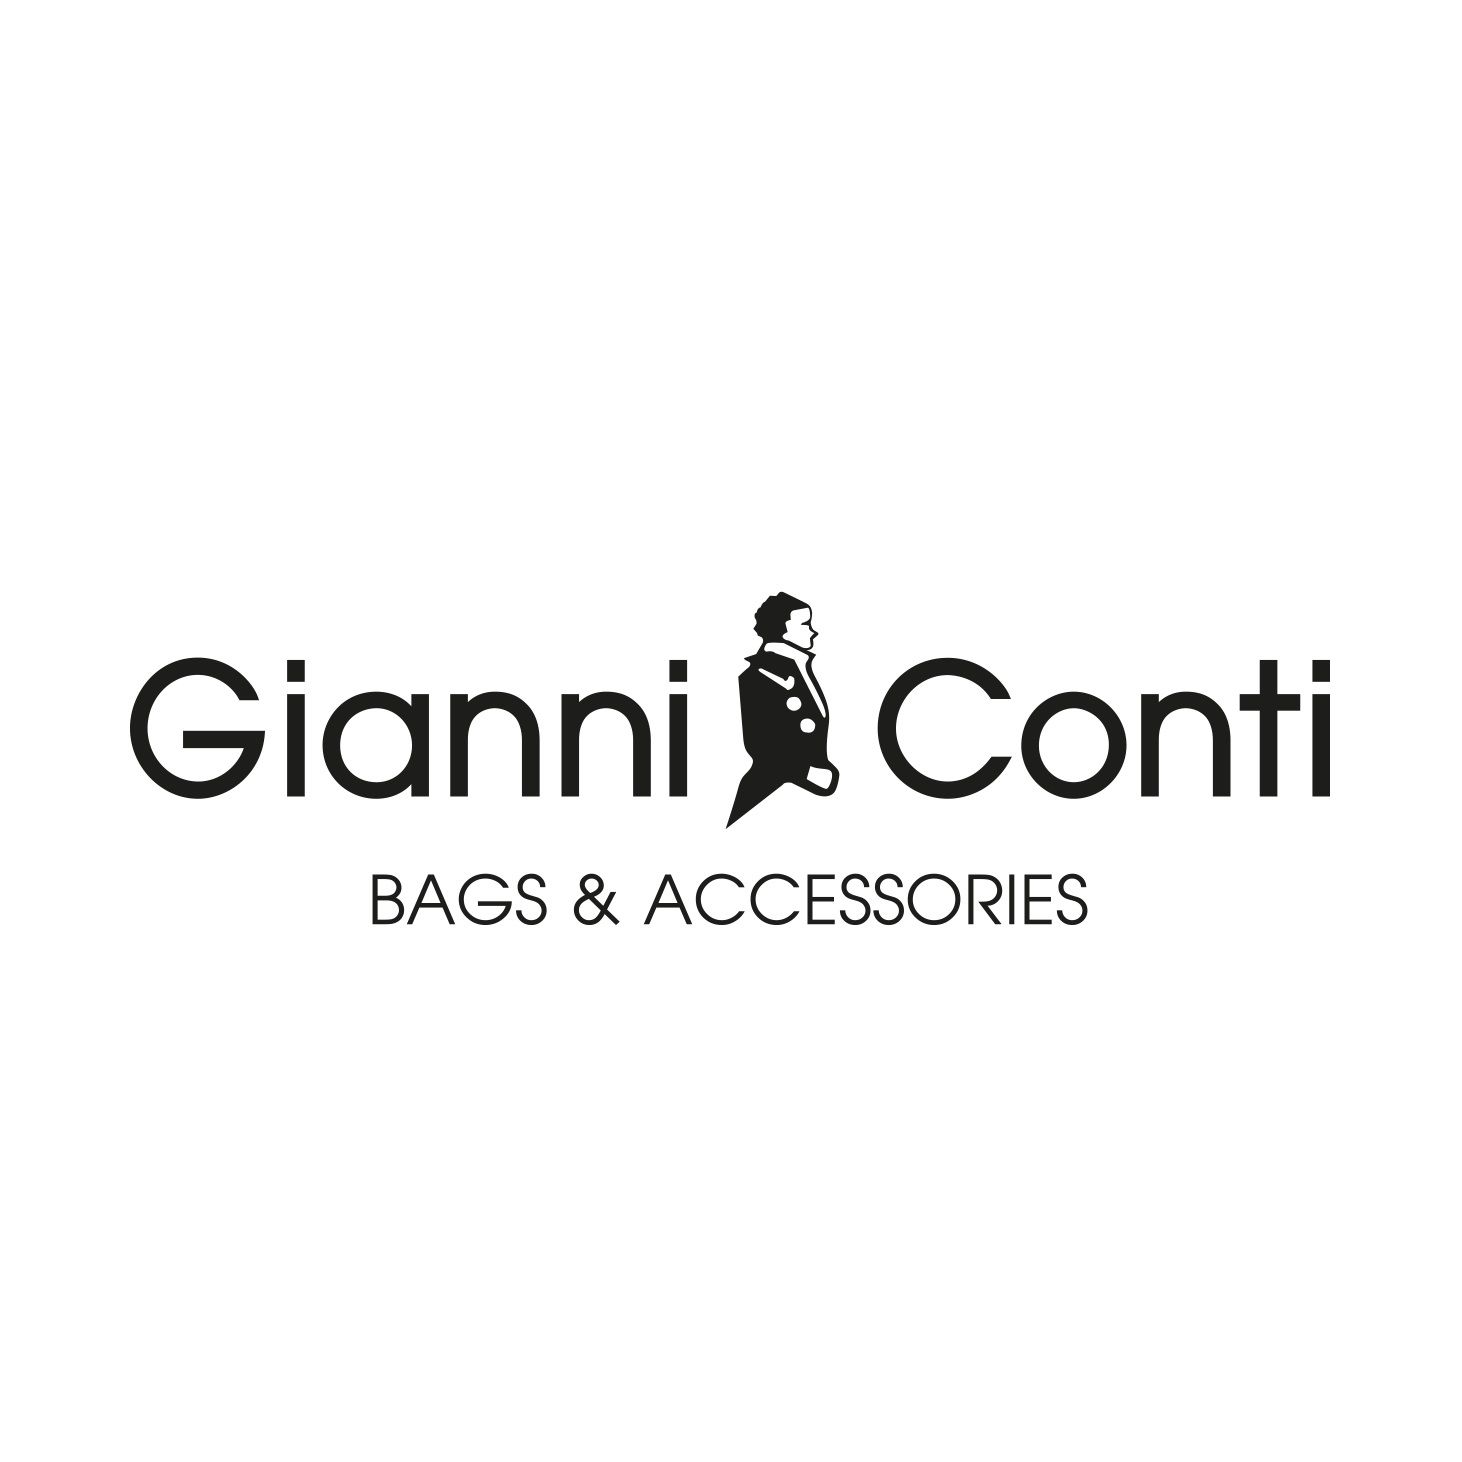 Gianni Conti logo